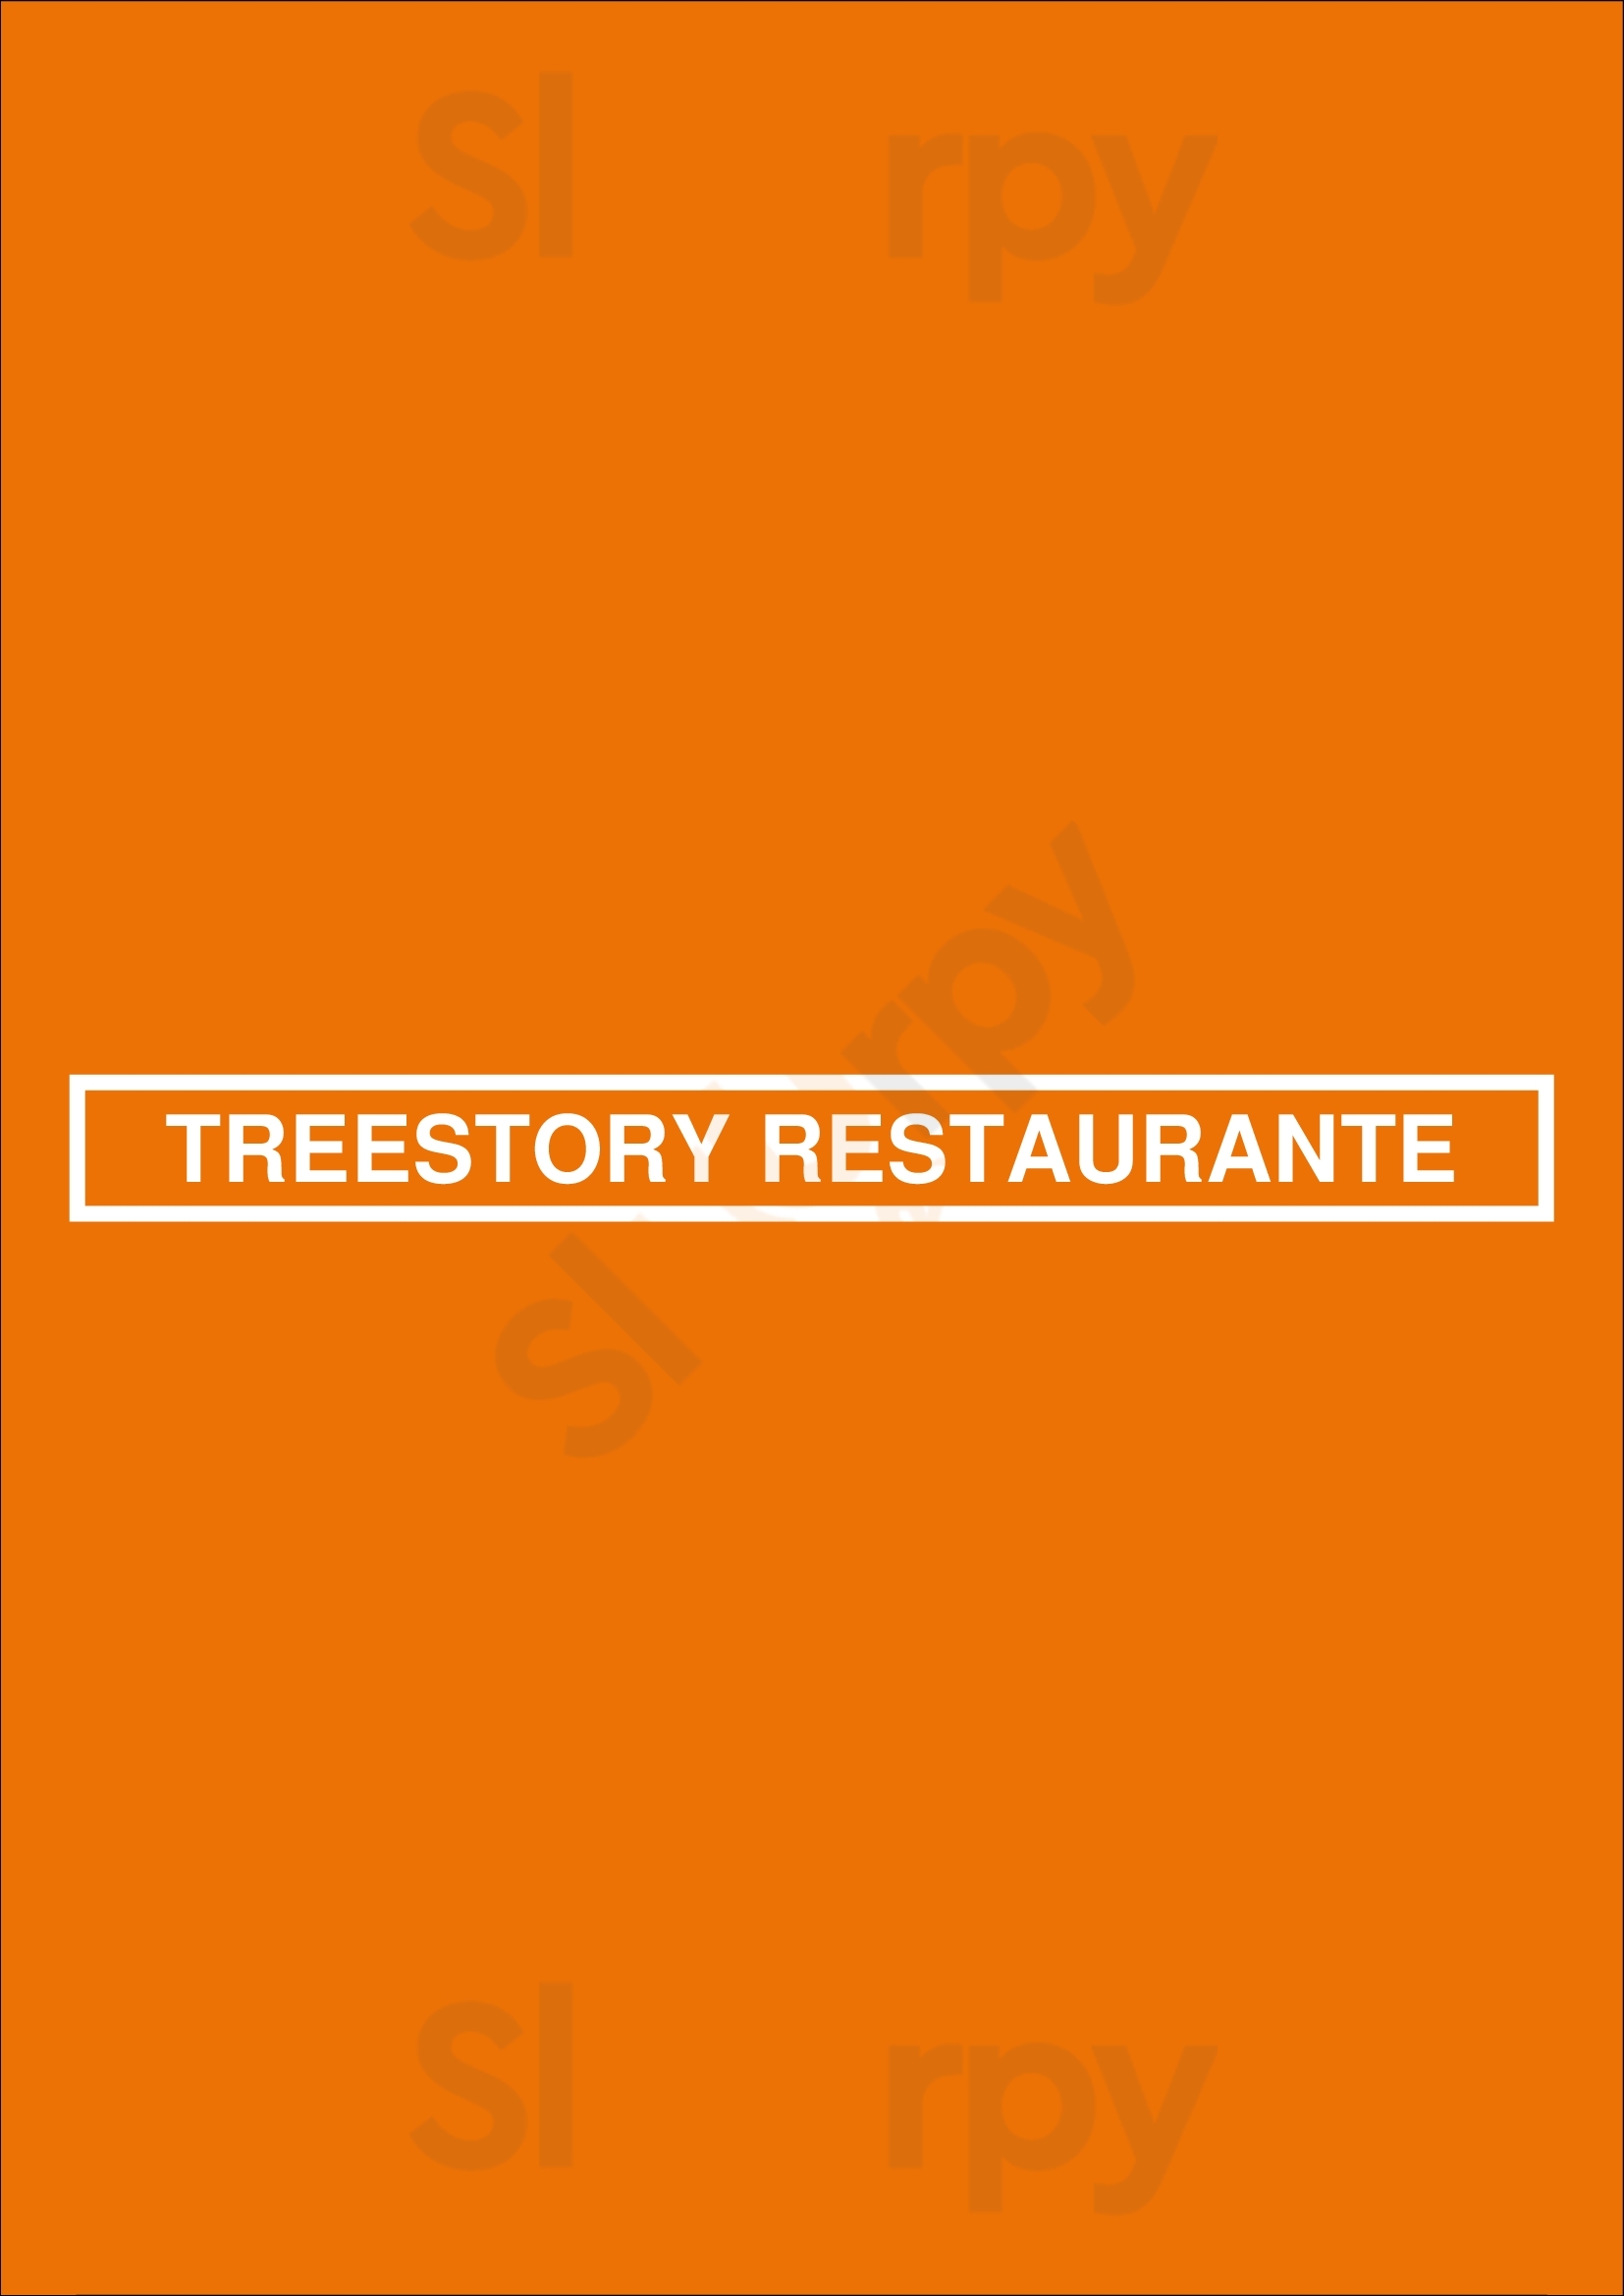 Treestory Restaurante Lisboa Menu - 1